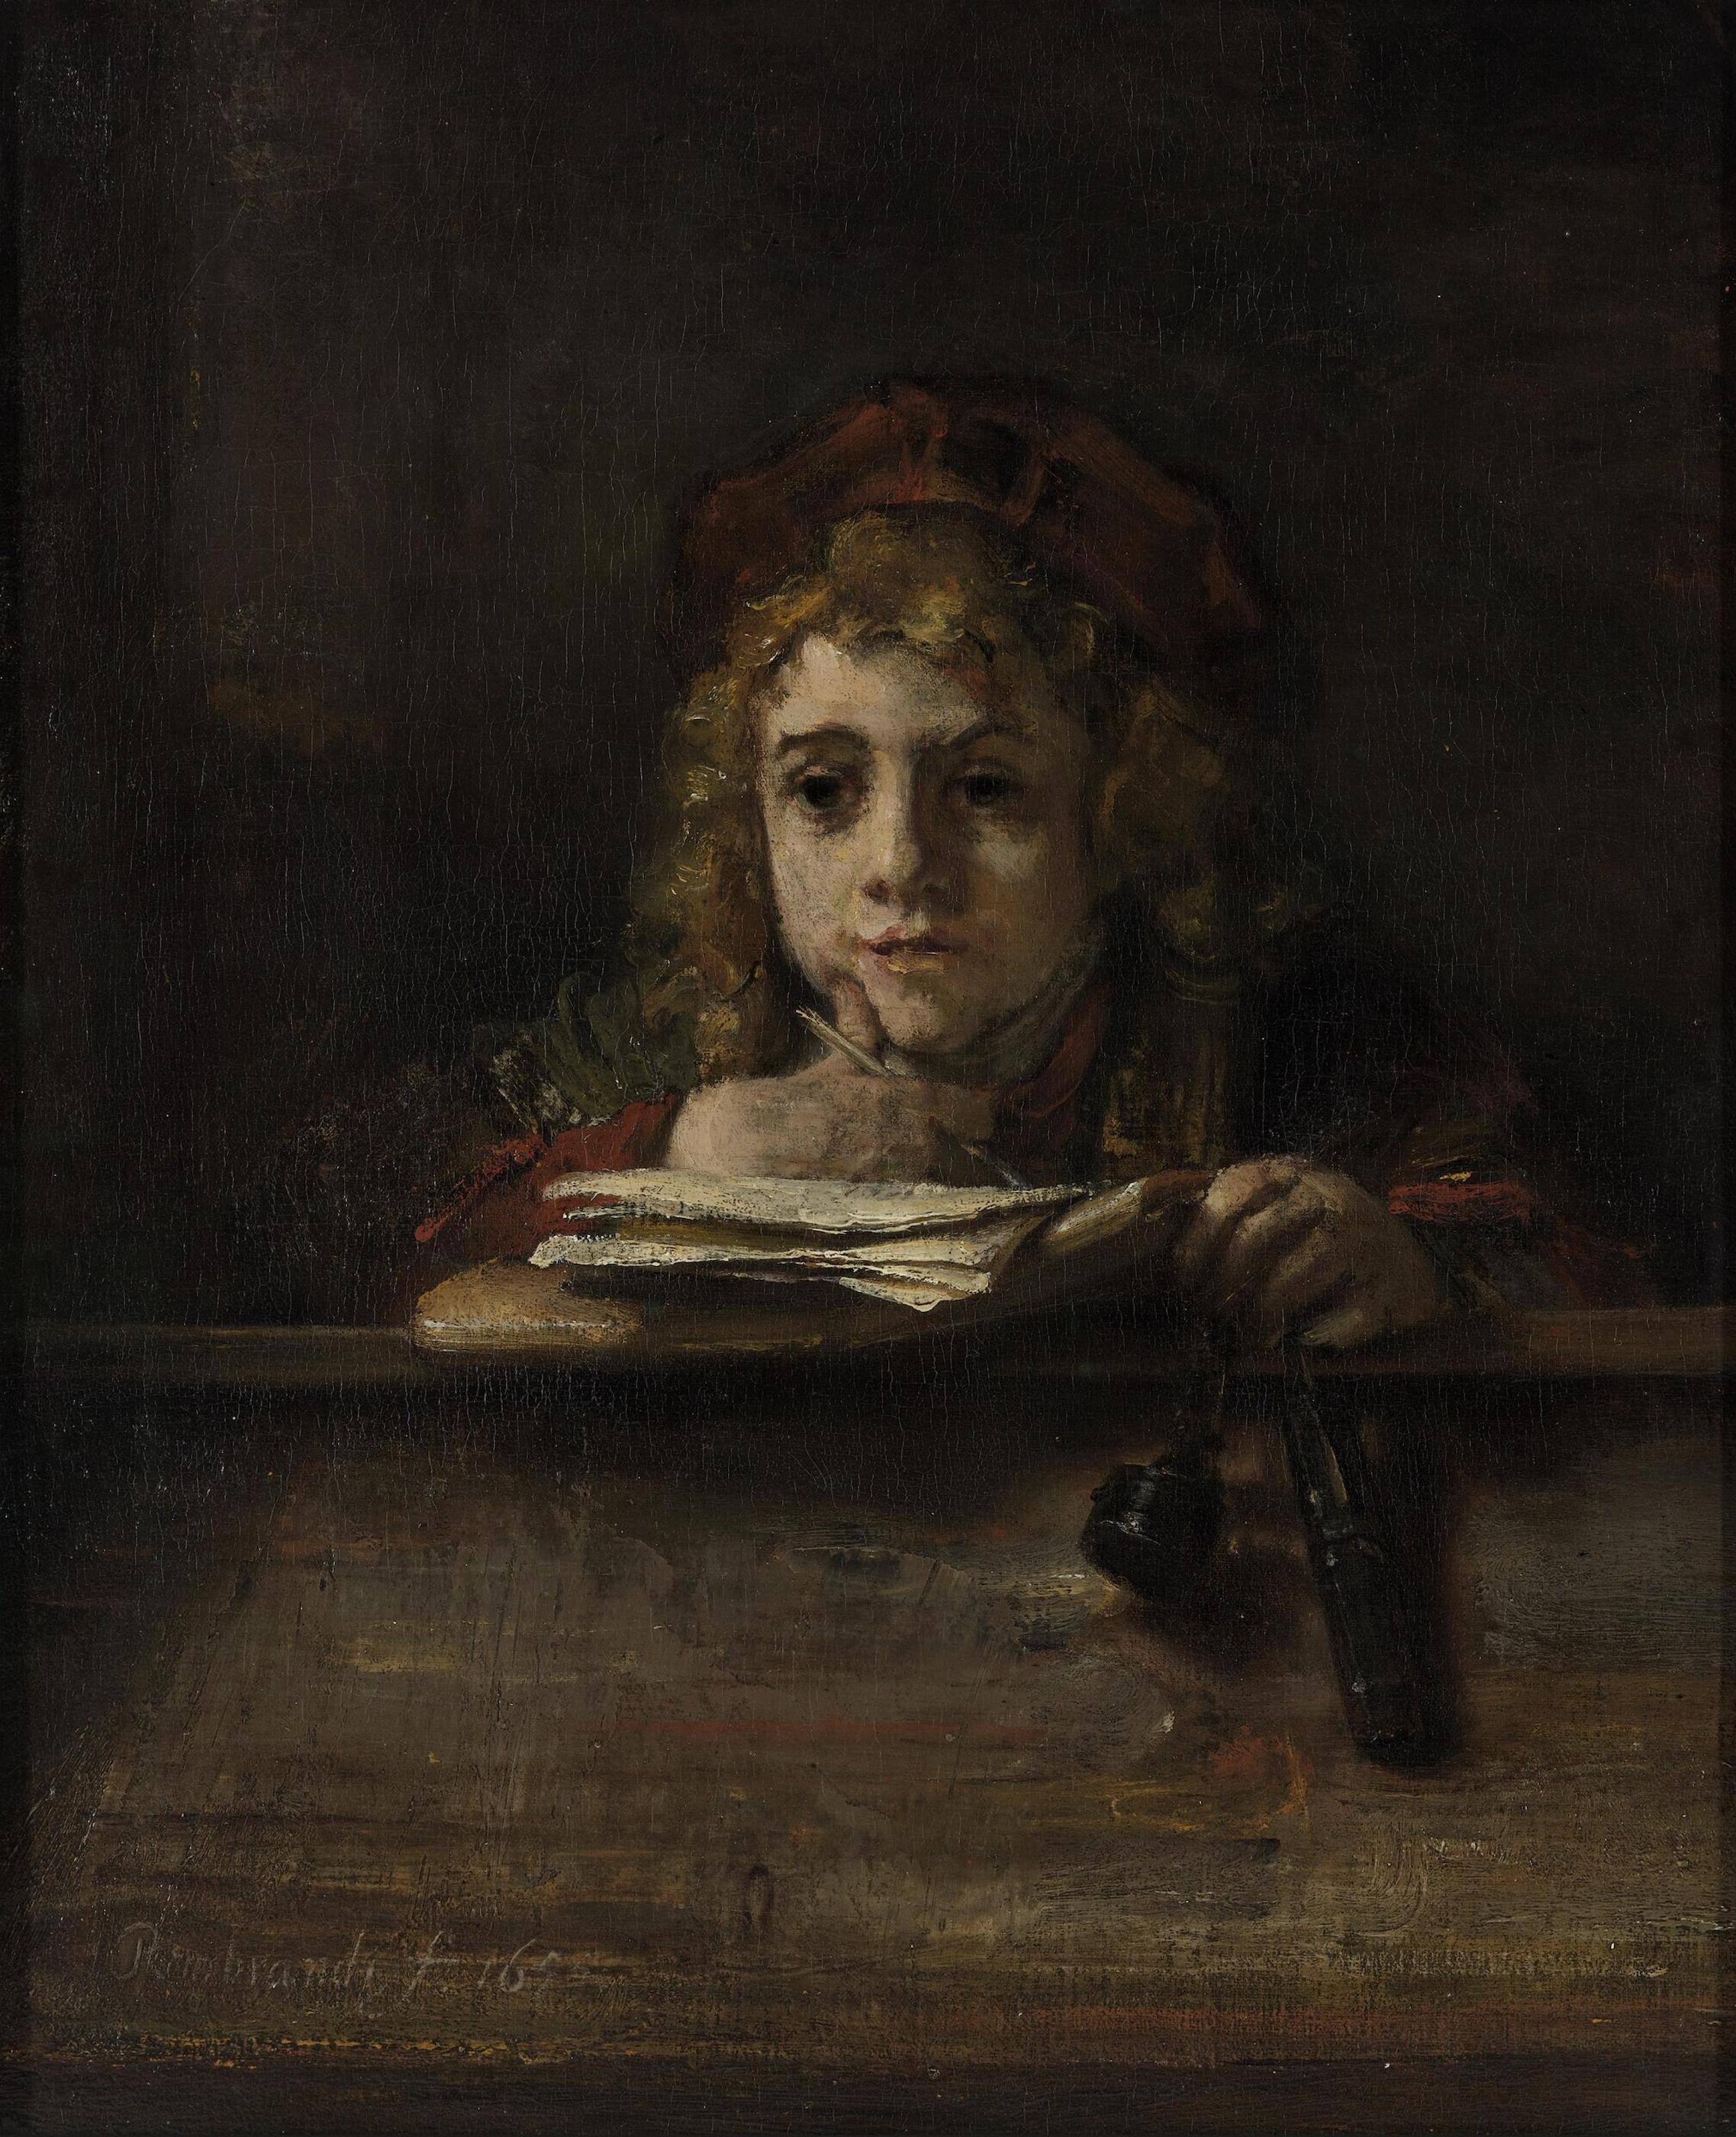 Tito al suo scrittoio by Rembrandt van Rijn - 1655 - 63 x 77 cm 